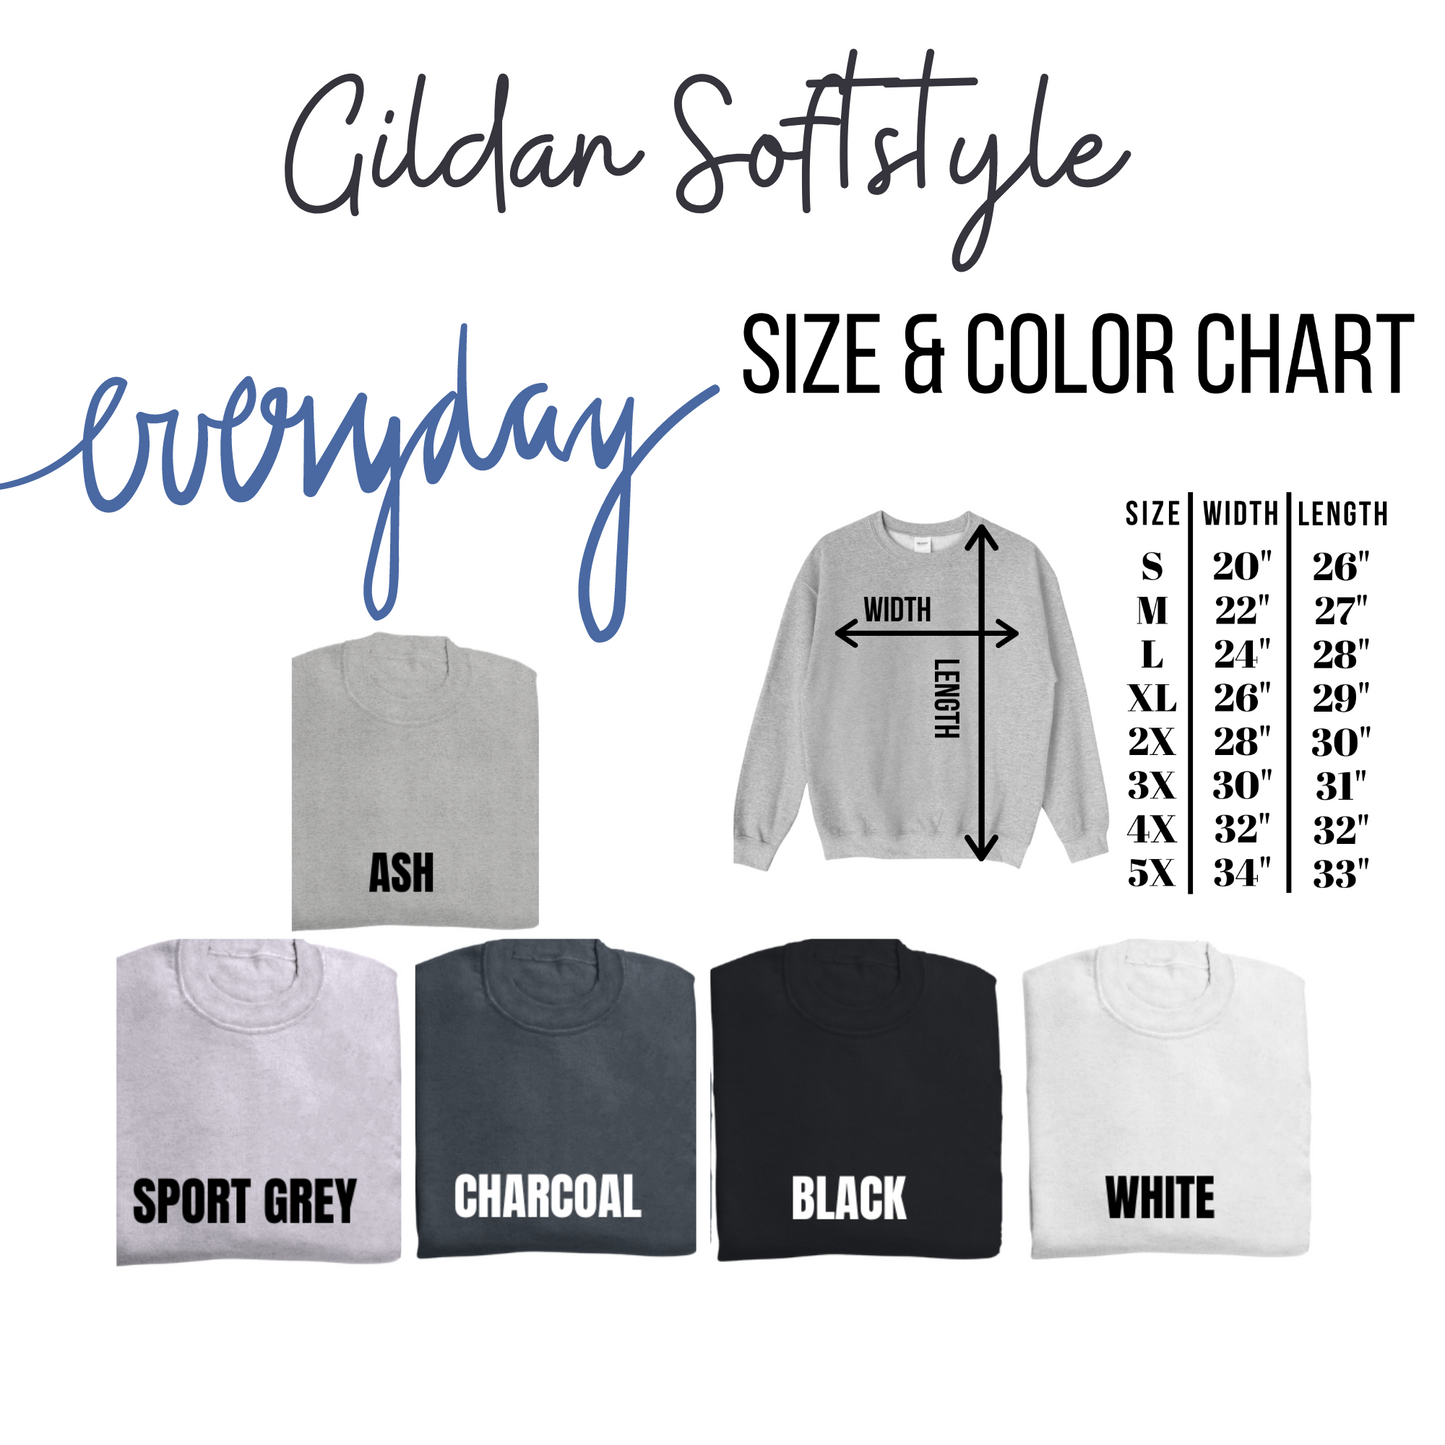 Bad Witches Club Gildan Softstyle T-shirt or Sweatshirt